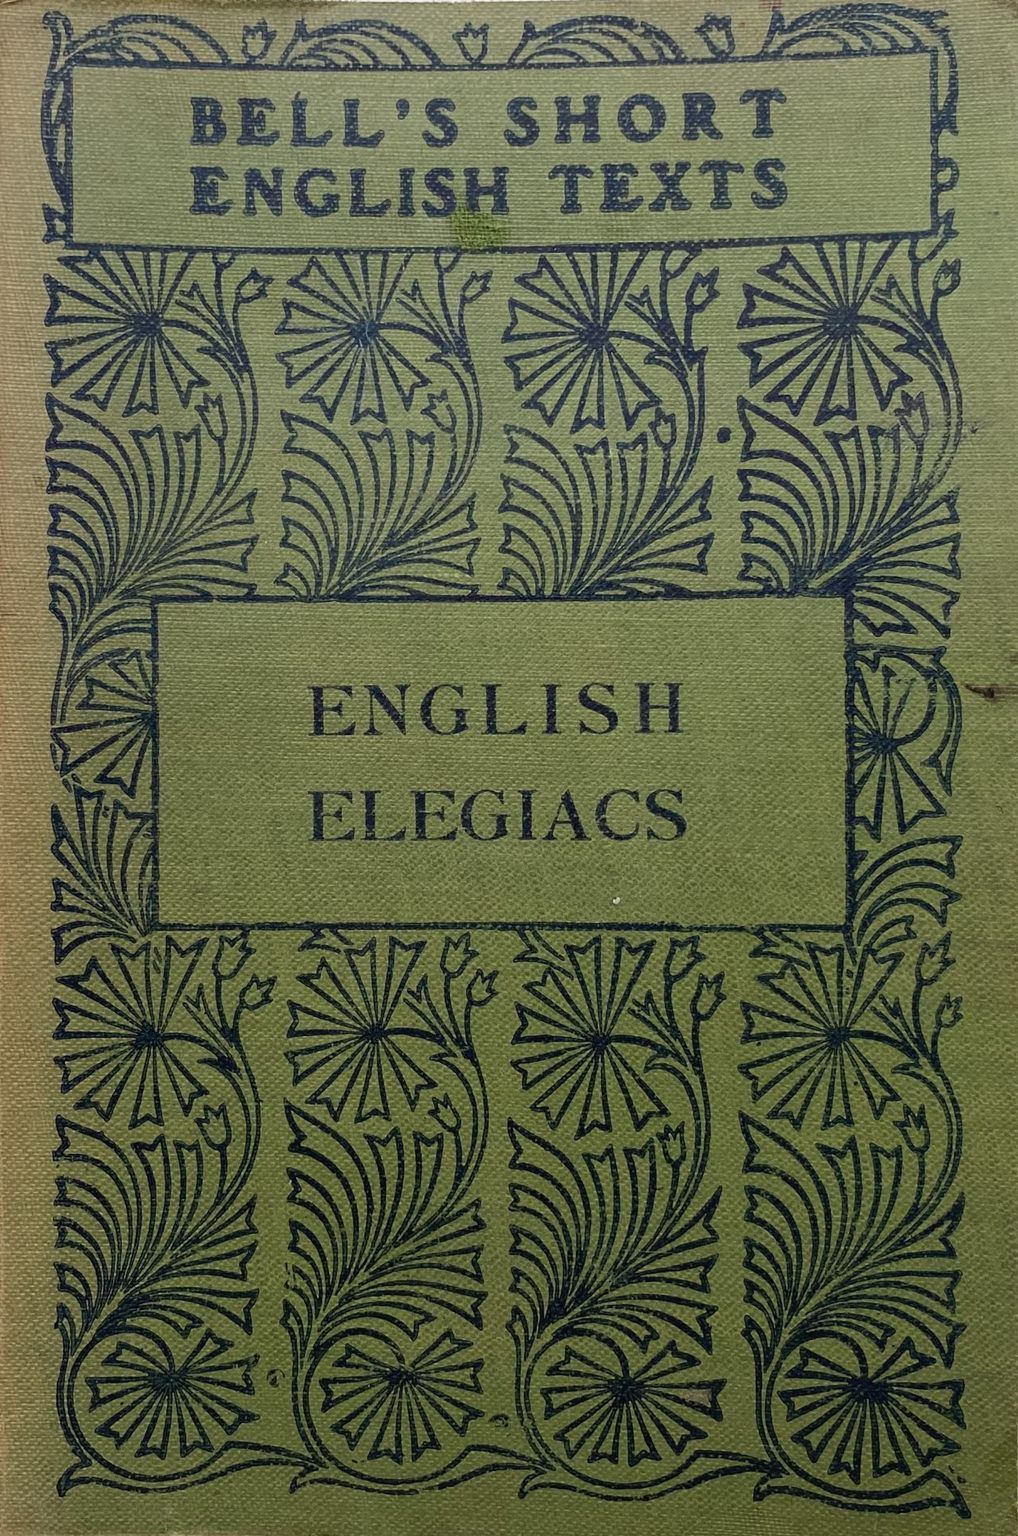 ENGLISH ELEGIACS: Bell's Short English Texts